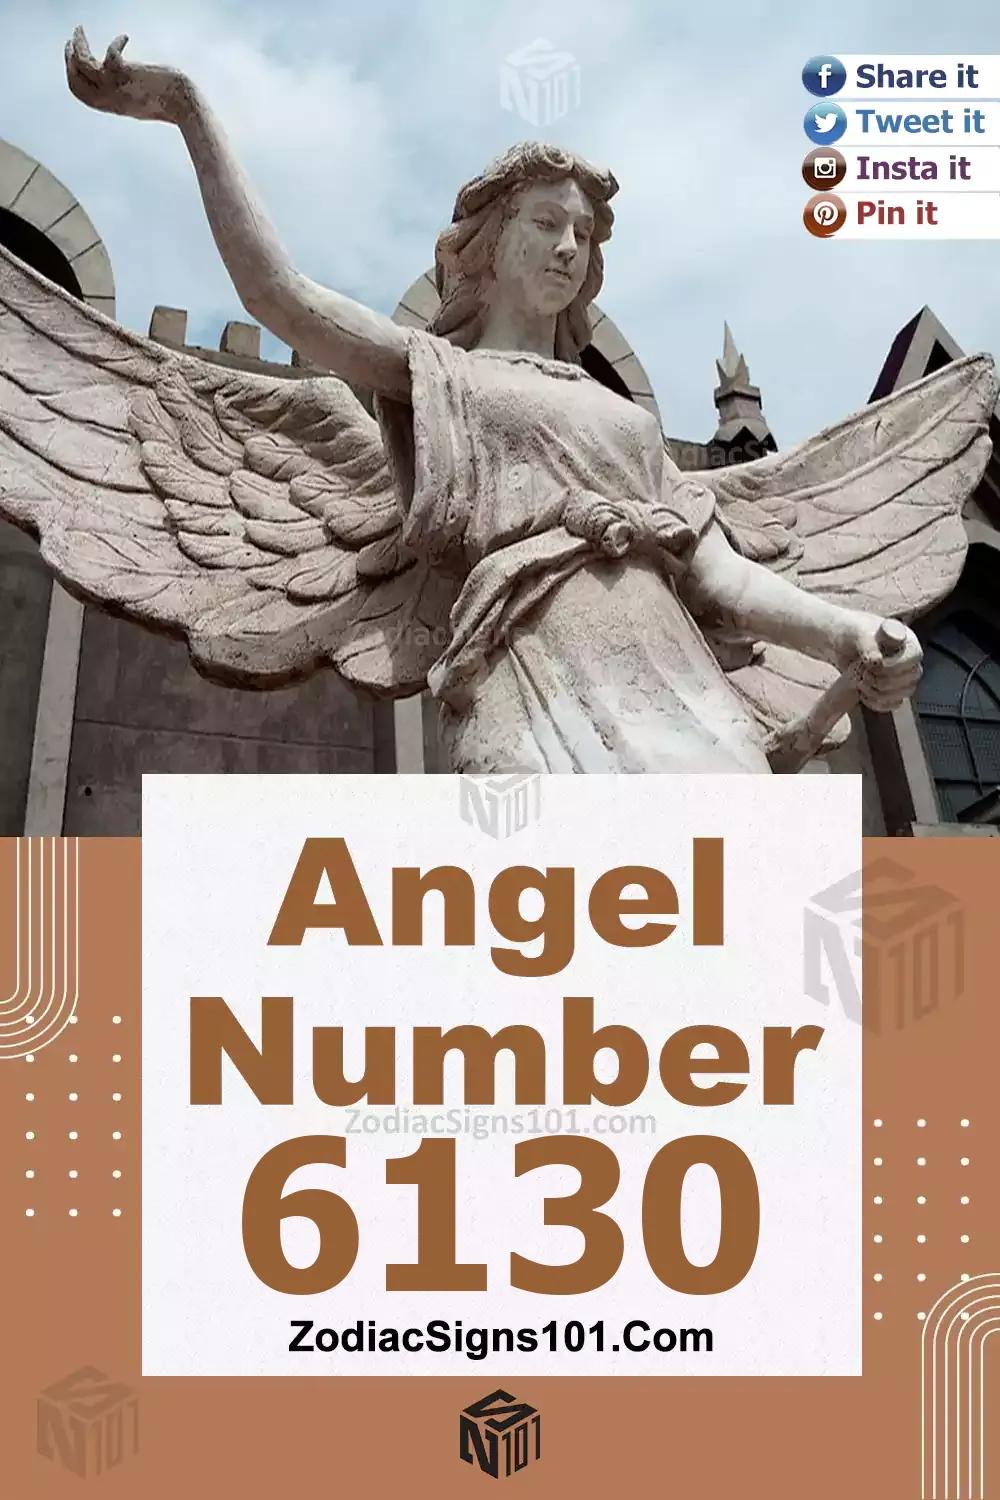 6130-Angel-Number-Meaning.jpg